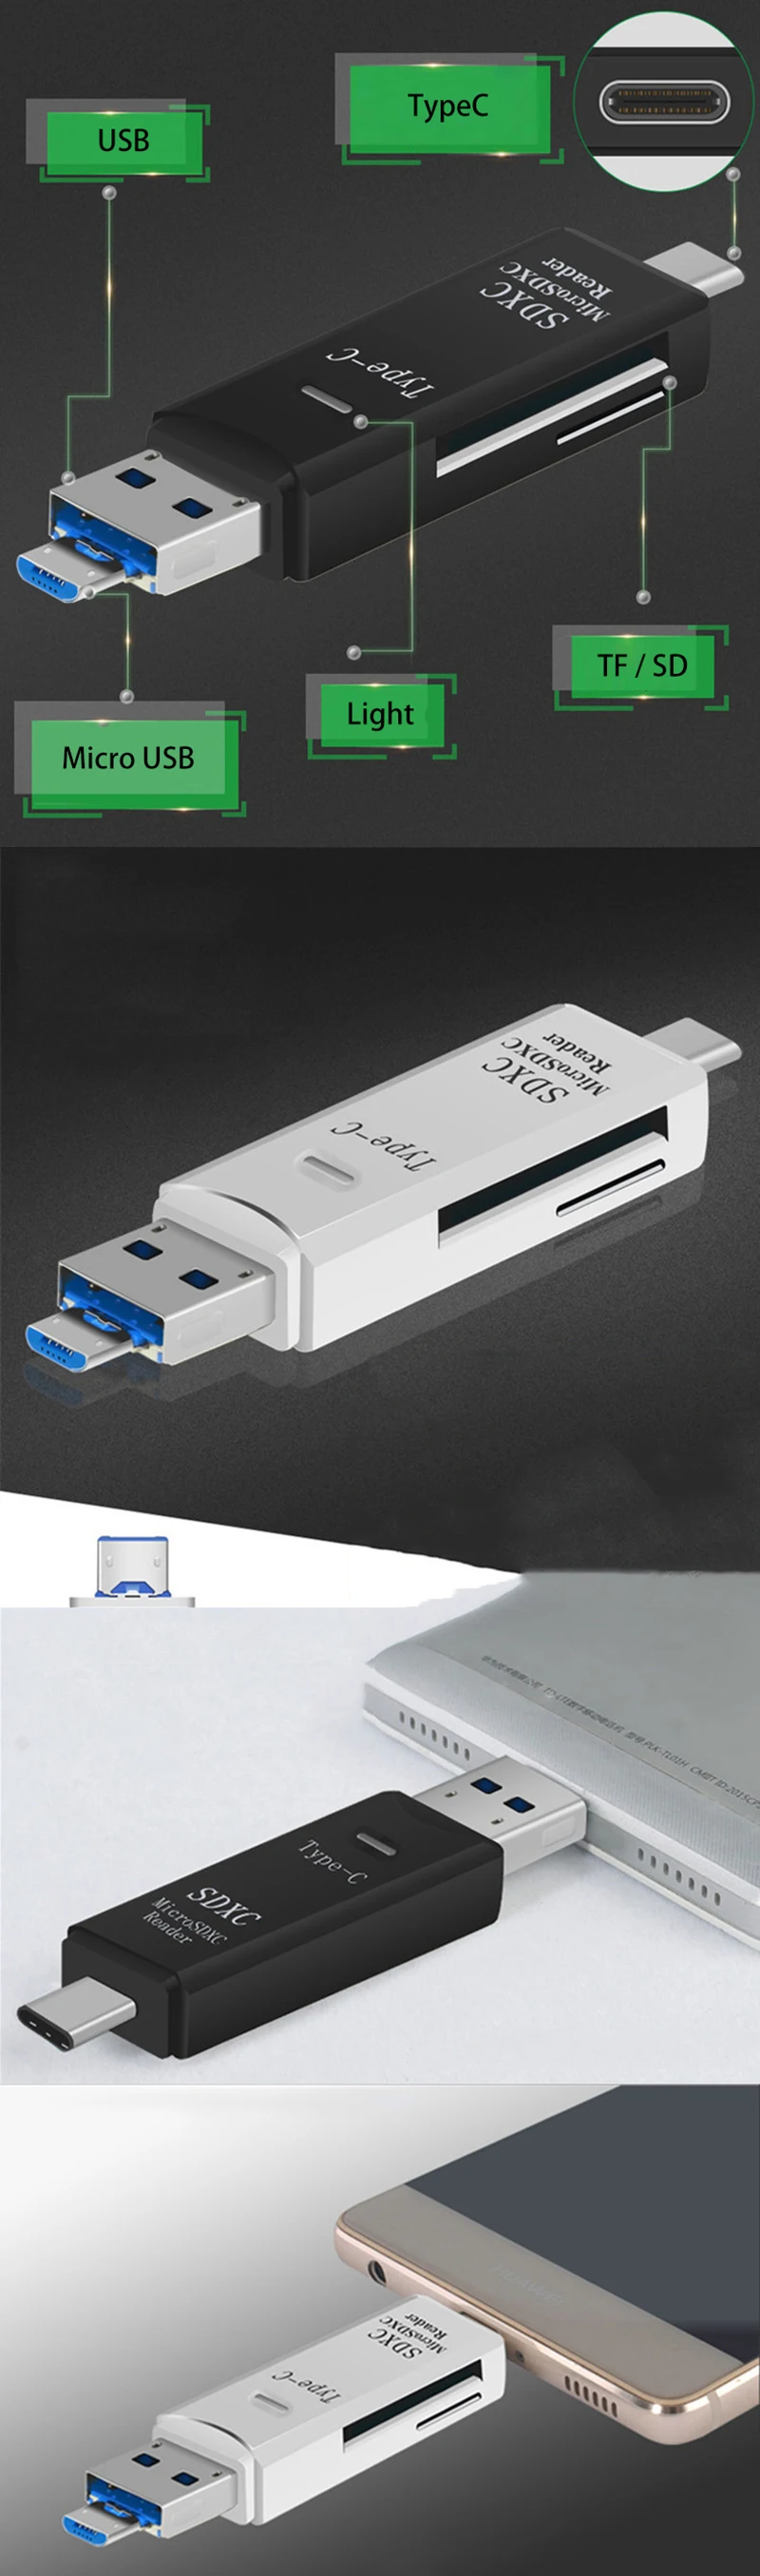 Kuman 2,0 OTG кард-ридер USB MicroUSB TypeC интерфейс с Micro SD TF SD слот для карт флэш-памяти для телефона Y210